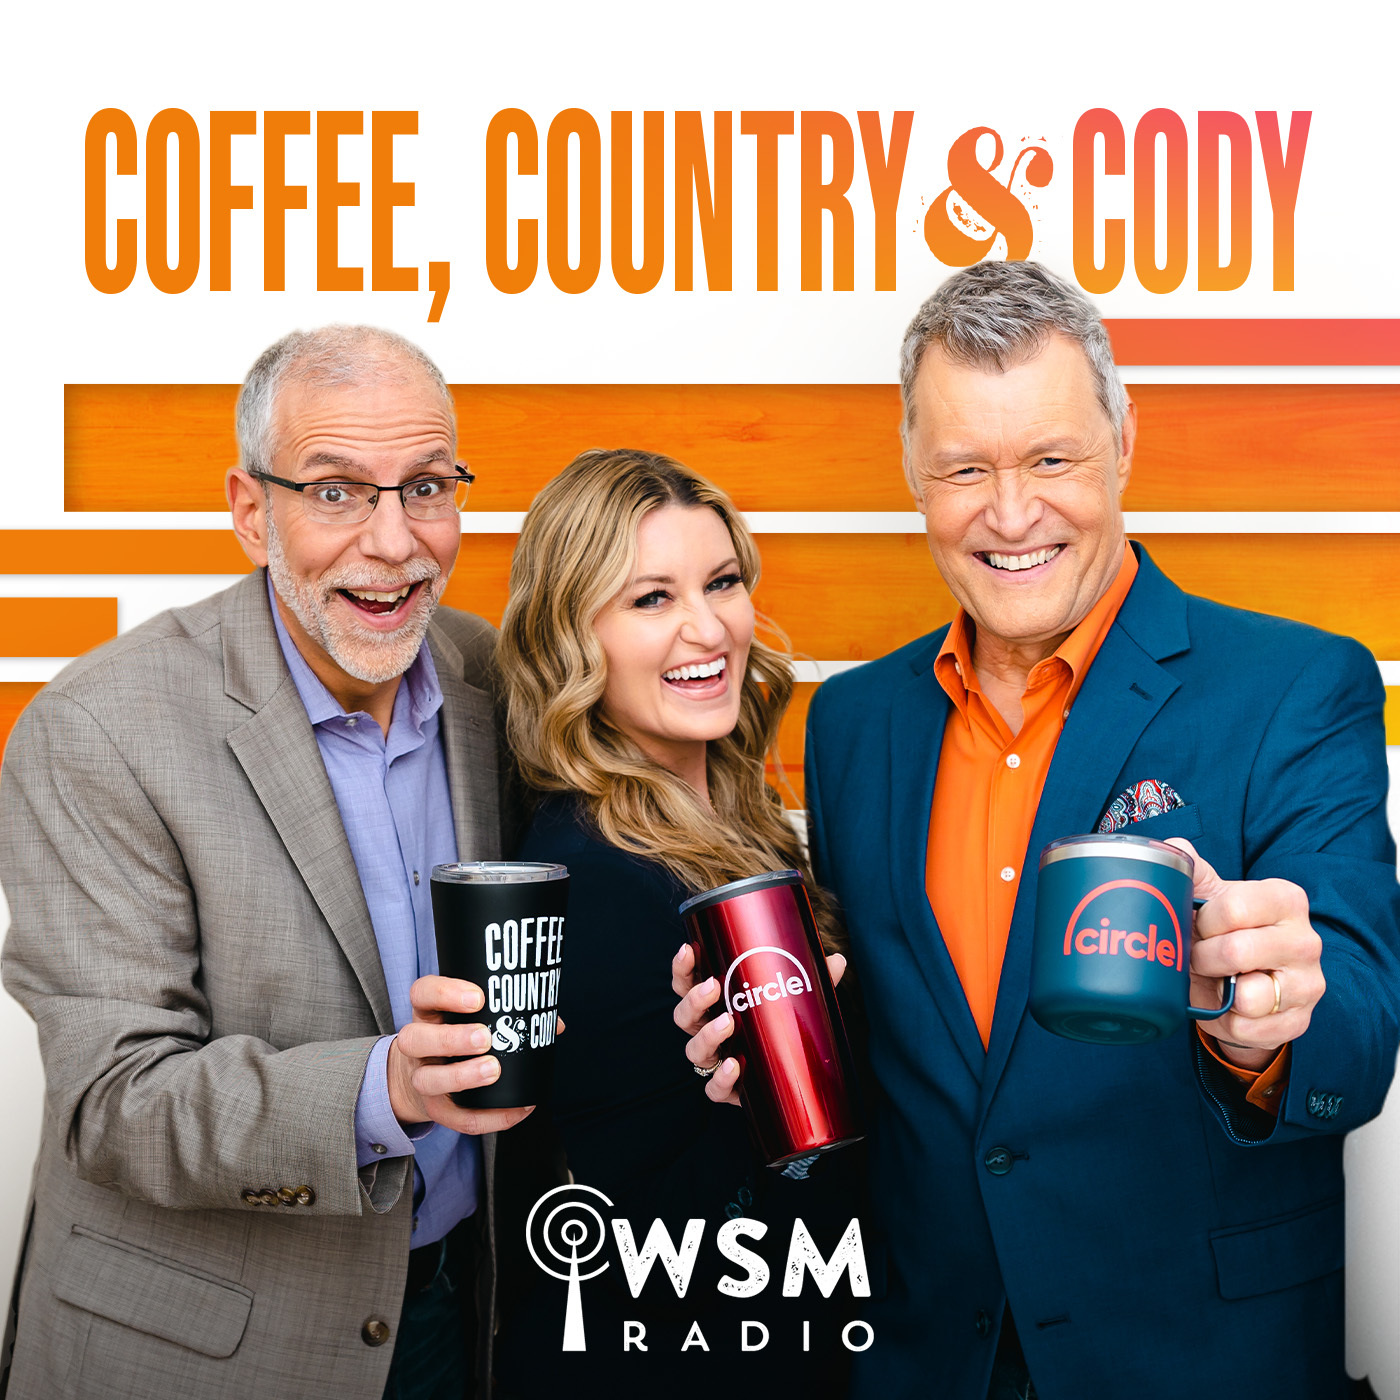 John McEuen on Coffee, Country & Cody